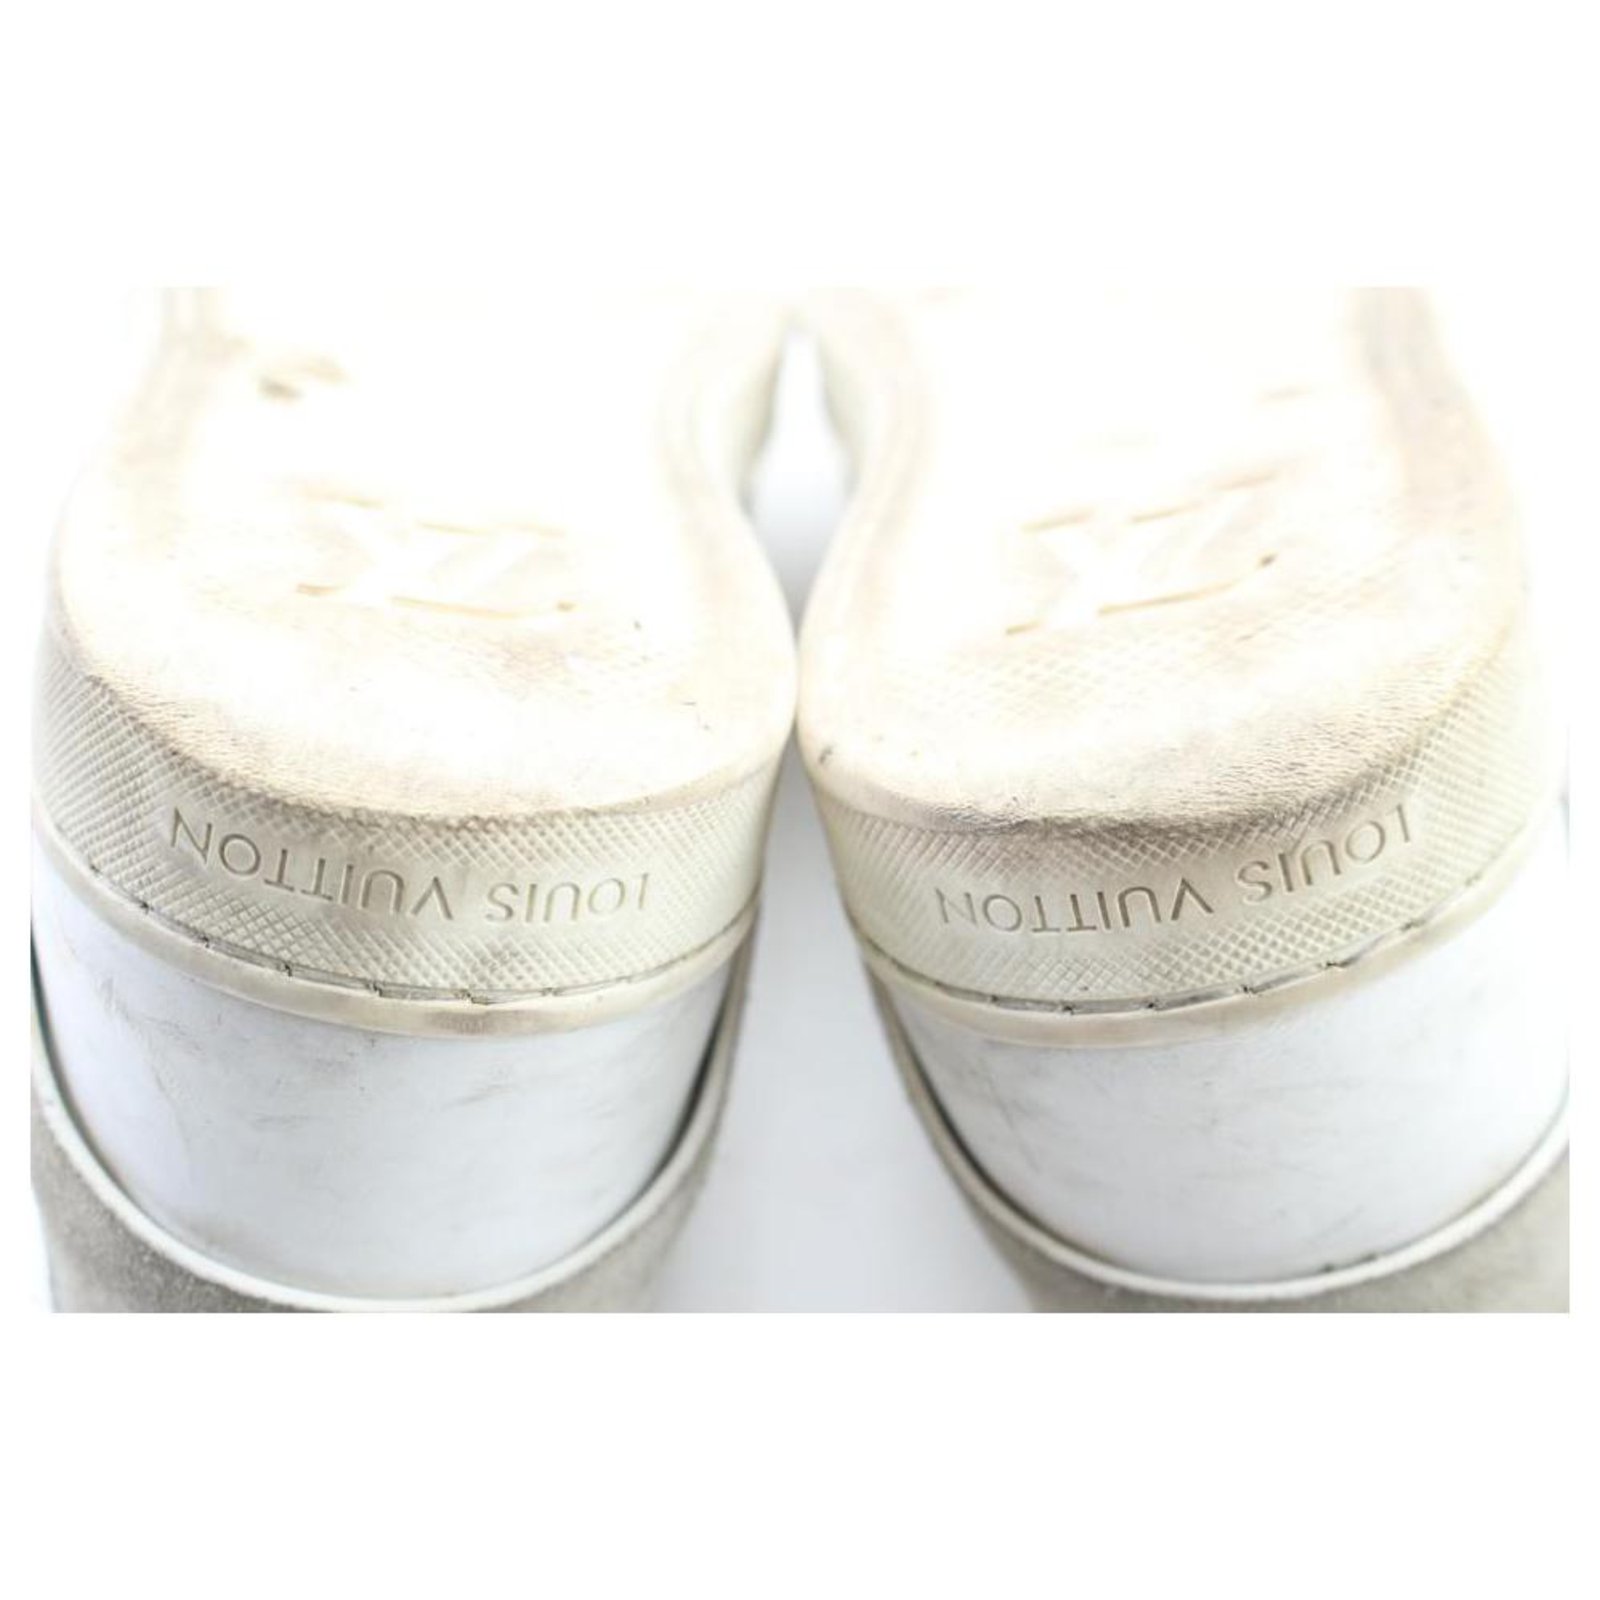 Louis Vuitton White Fuselage Sneaker Mens Sz 7.5 24LR0206